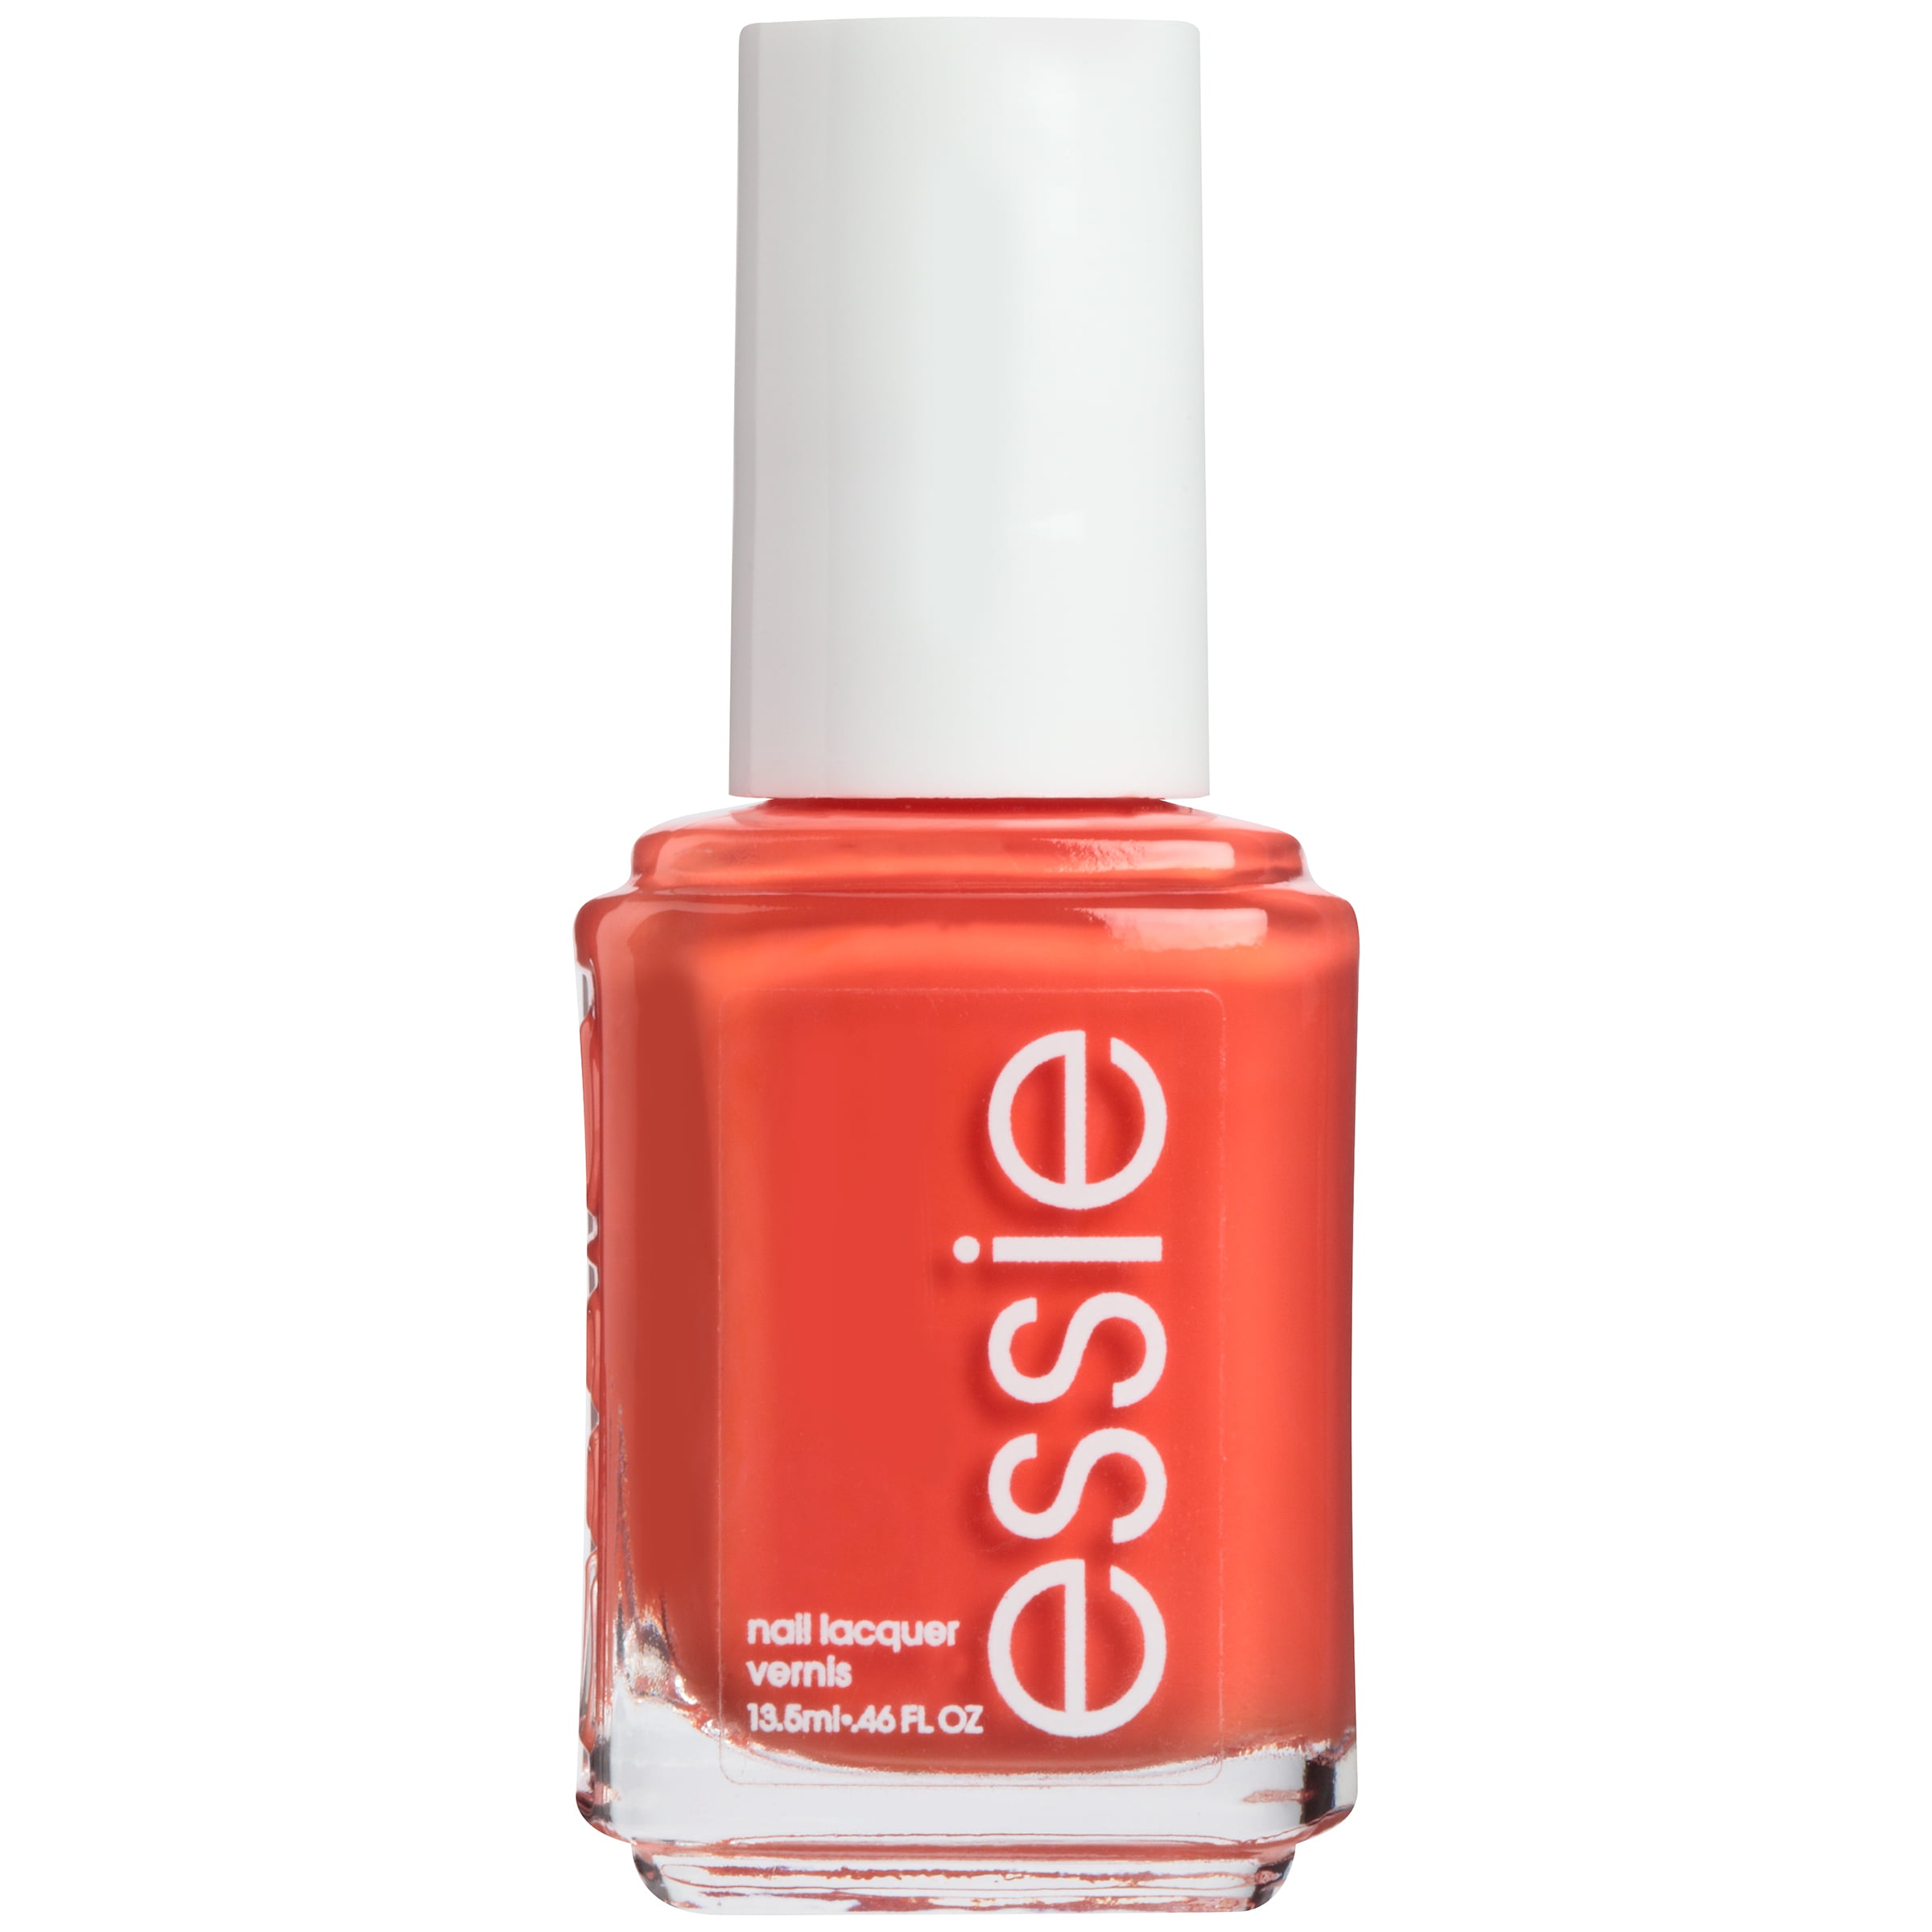 essie nail polish (corals), sunshine state of mind, 0.46 fl oz ...